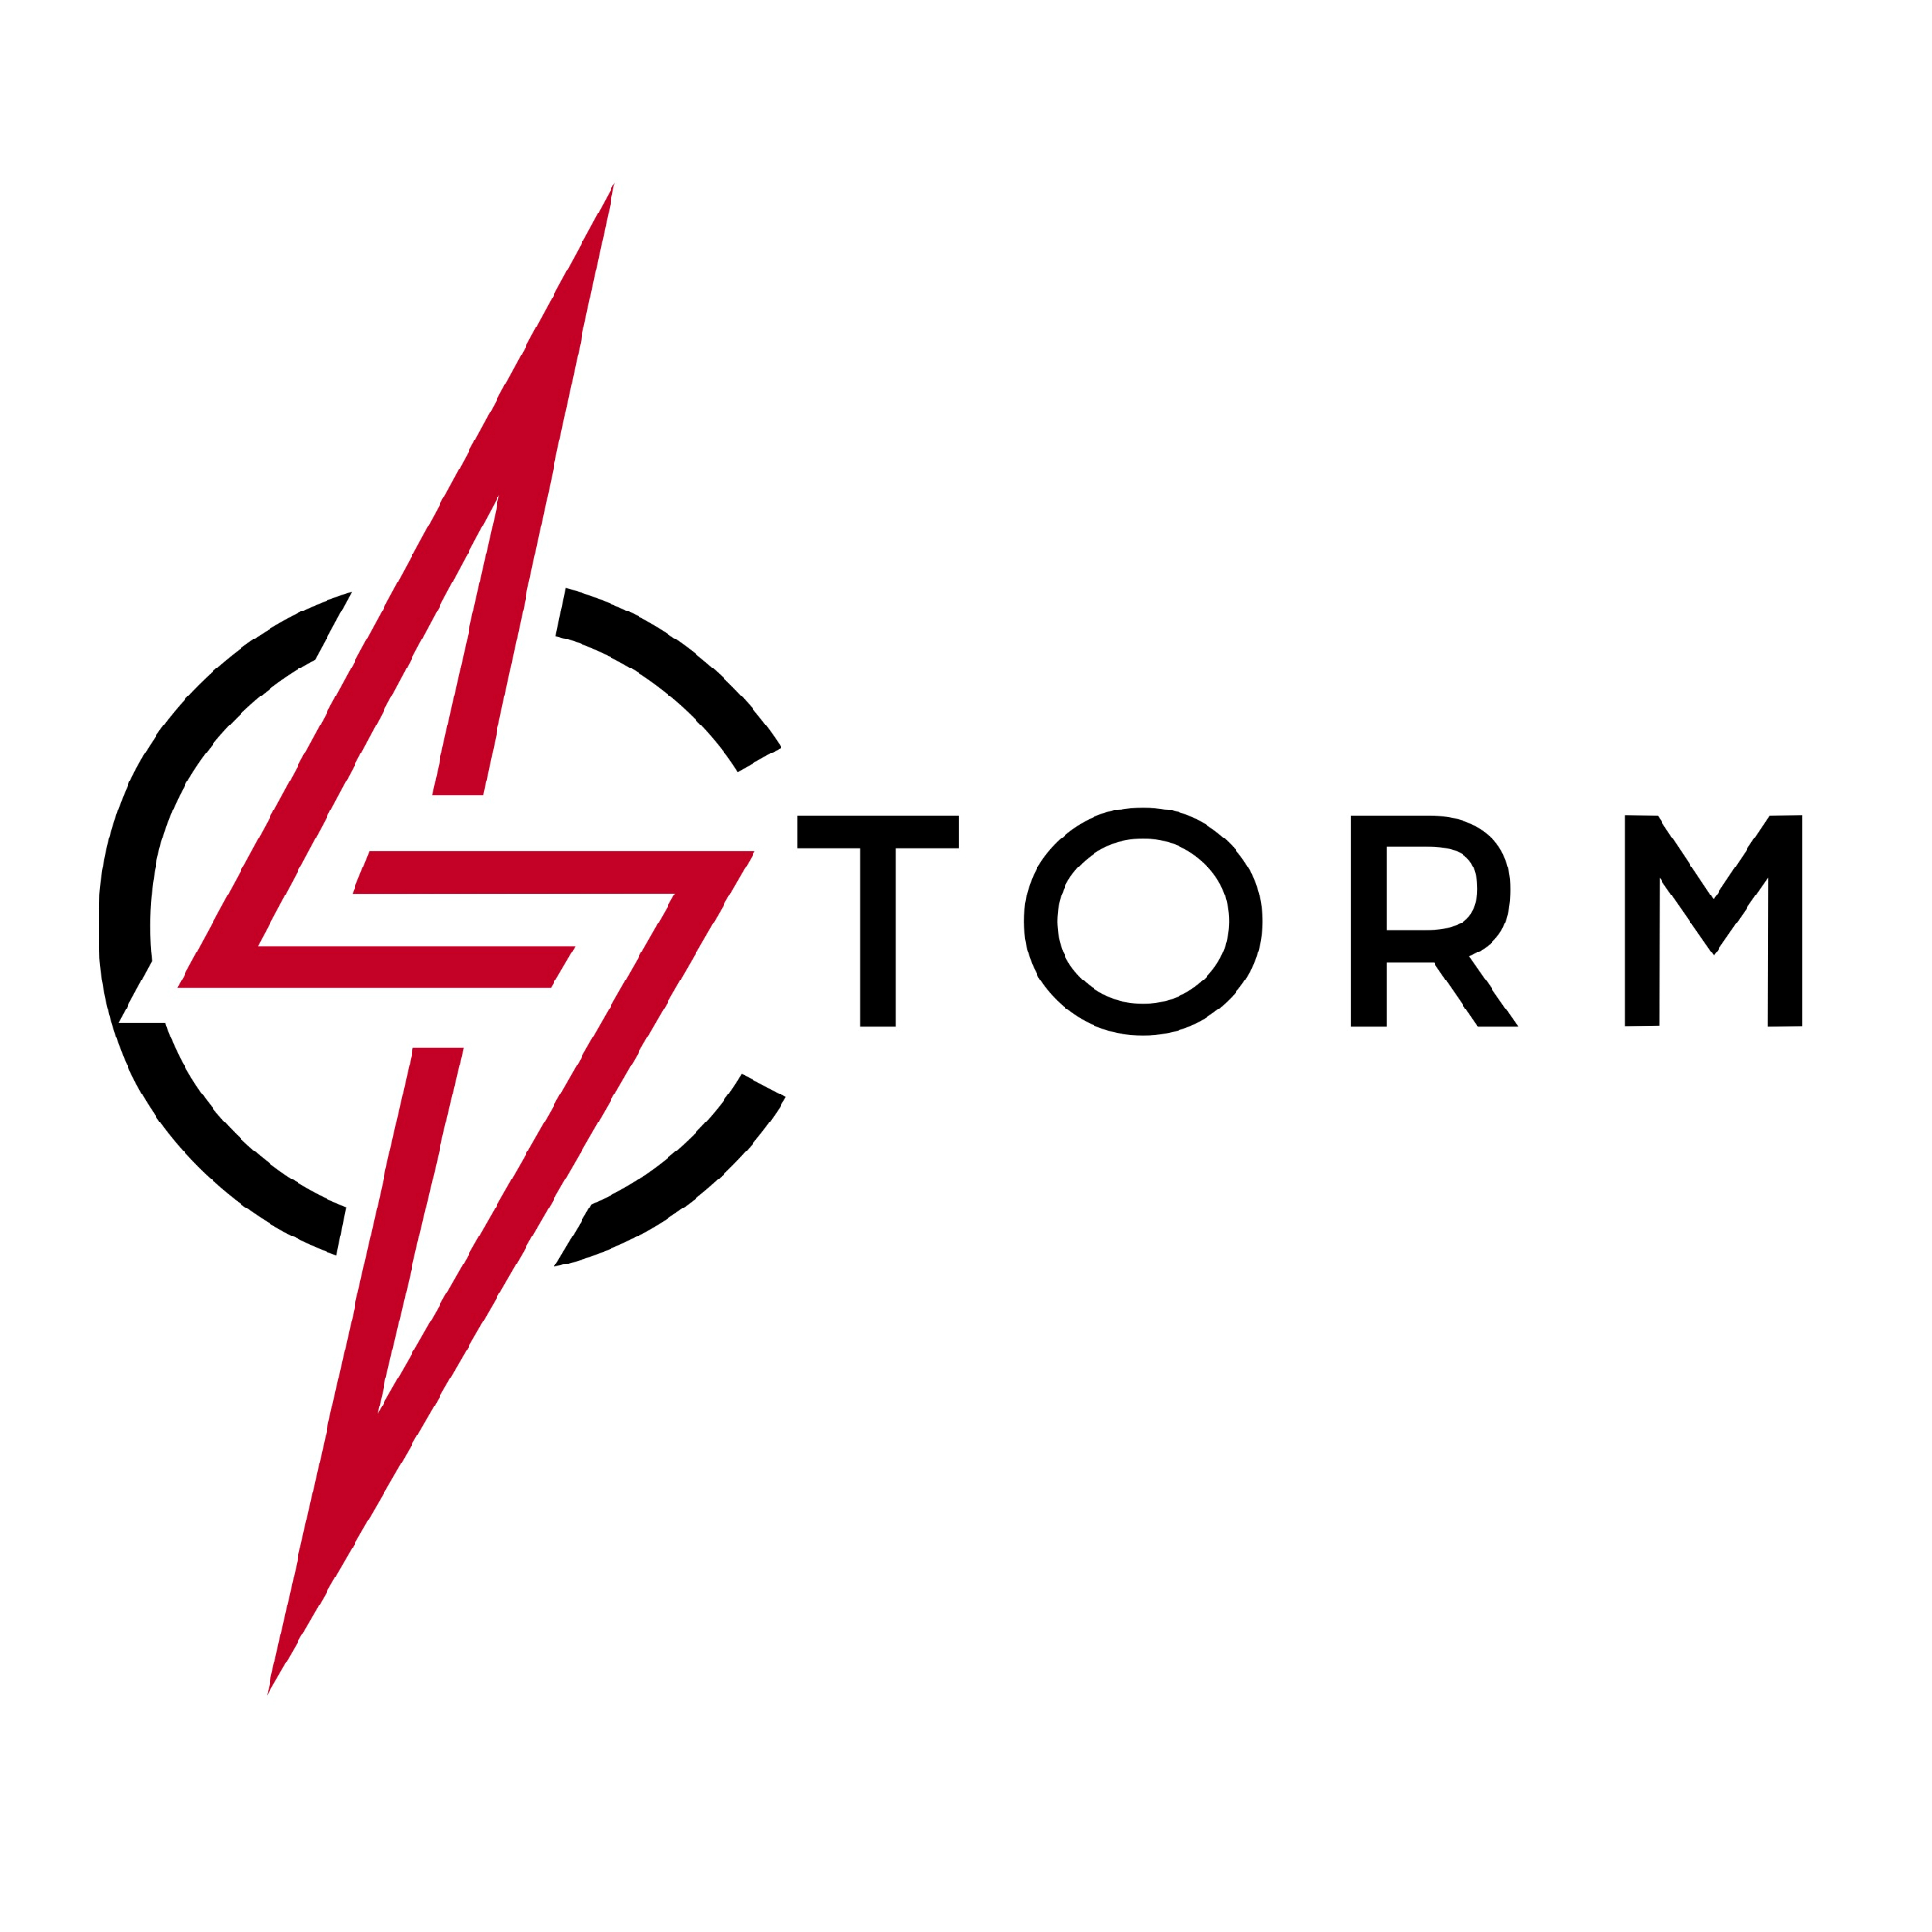 Organization logo for SC Storm